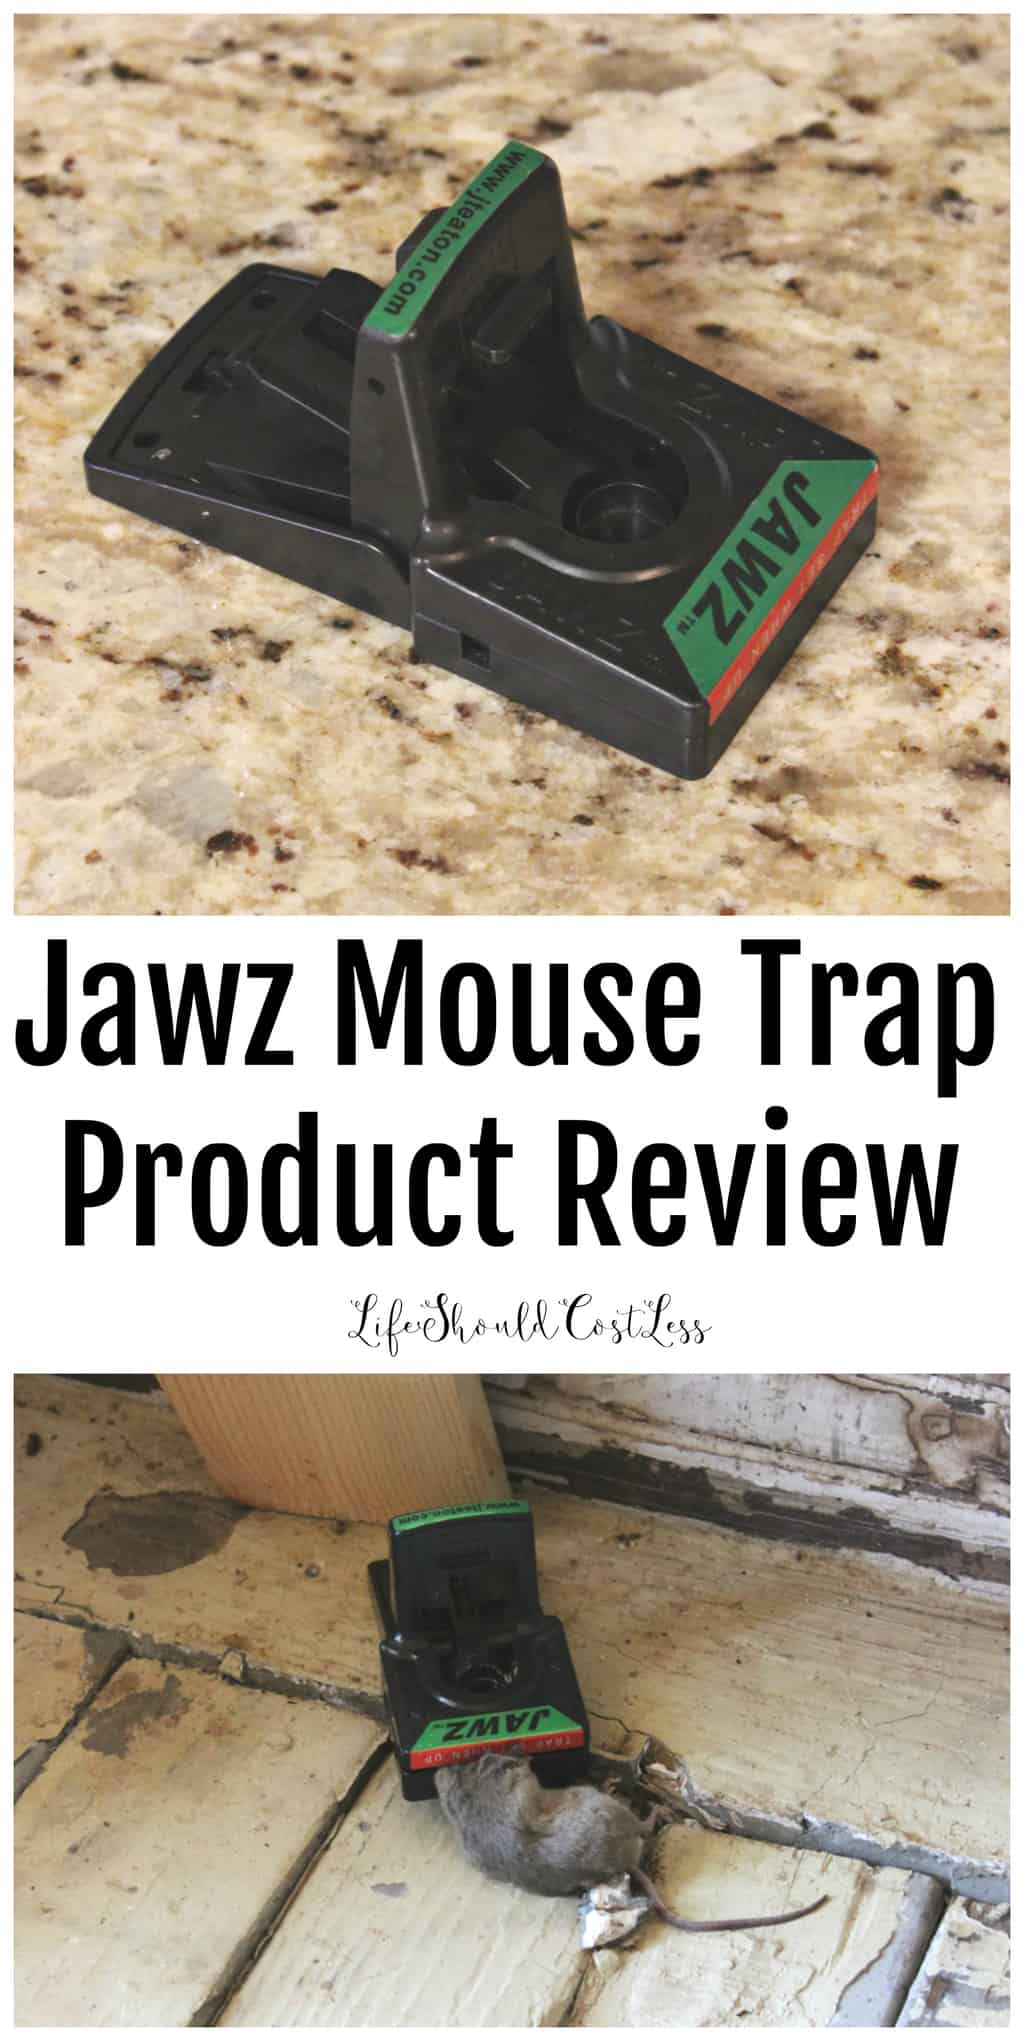 JAWZ Mousetrap Review 